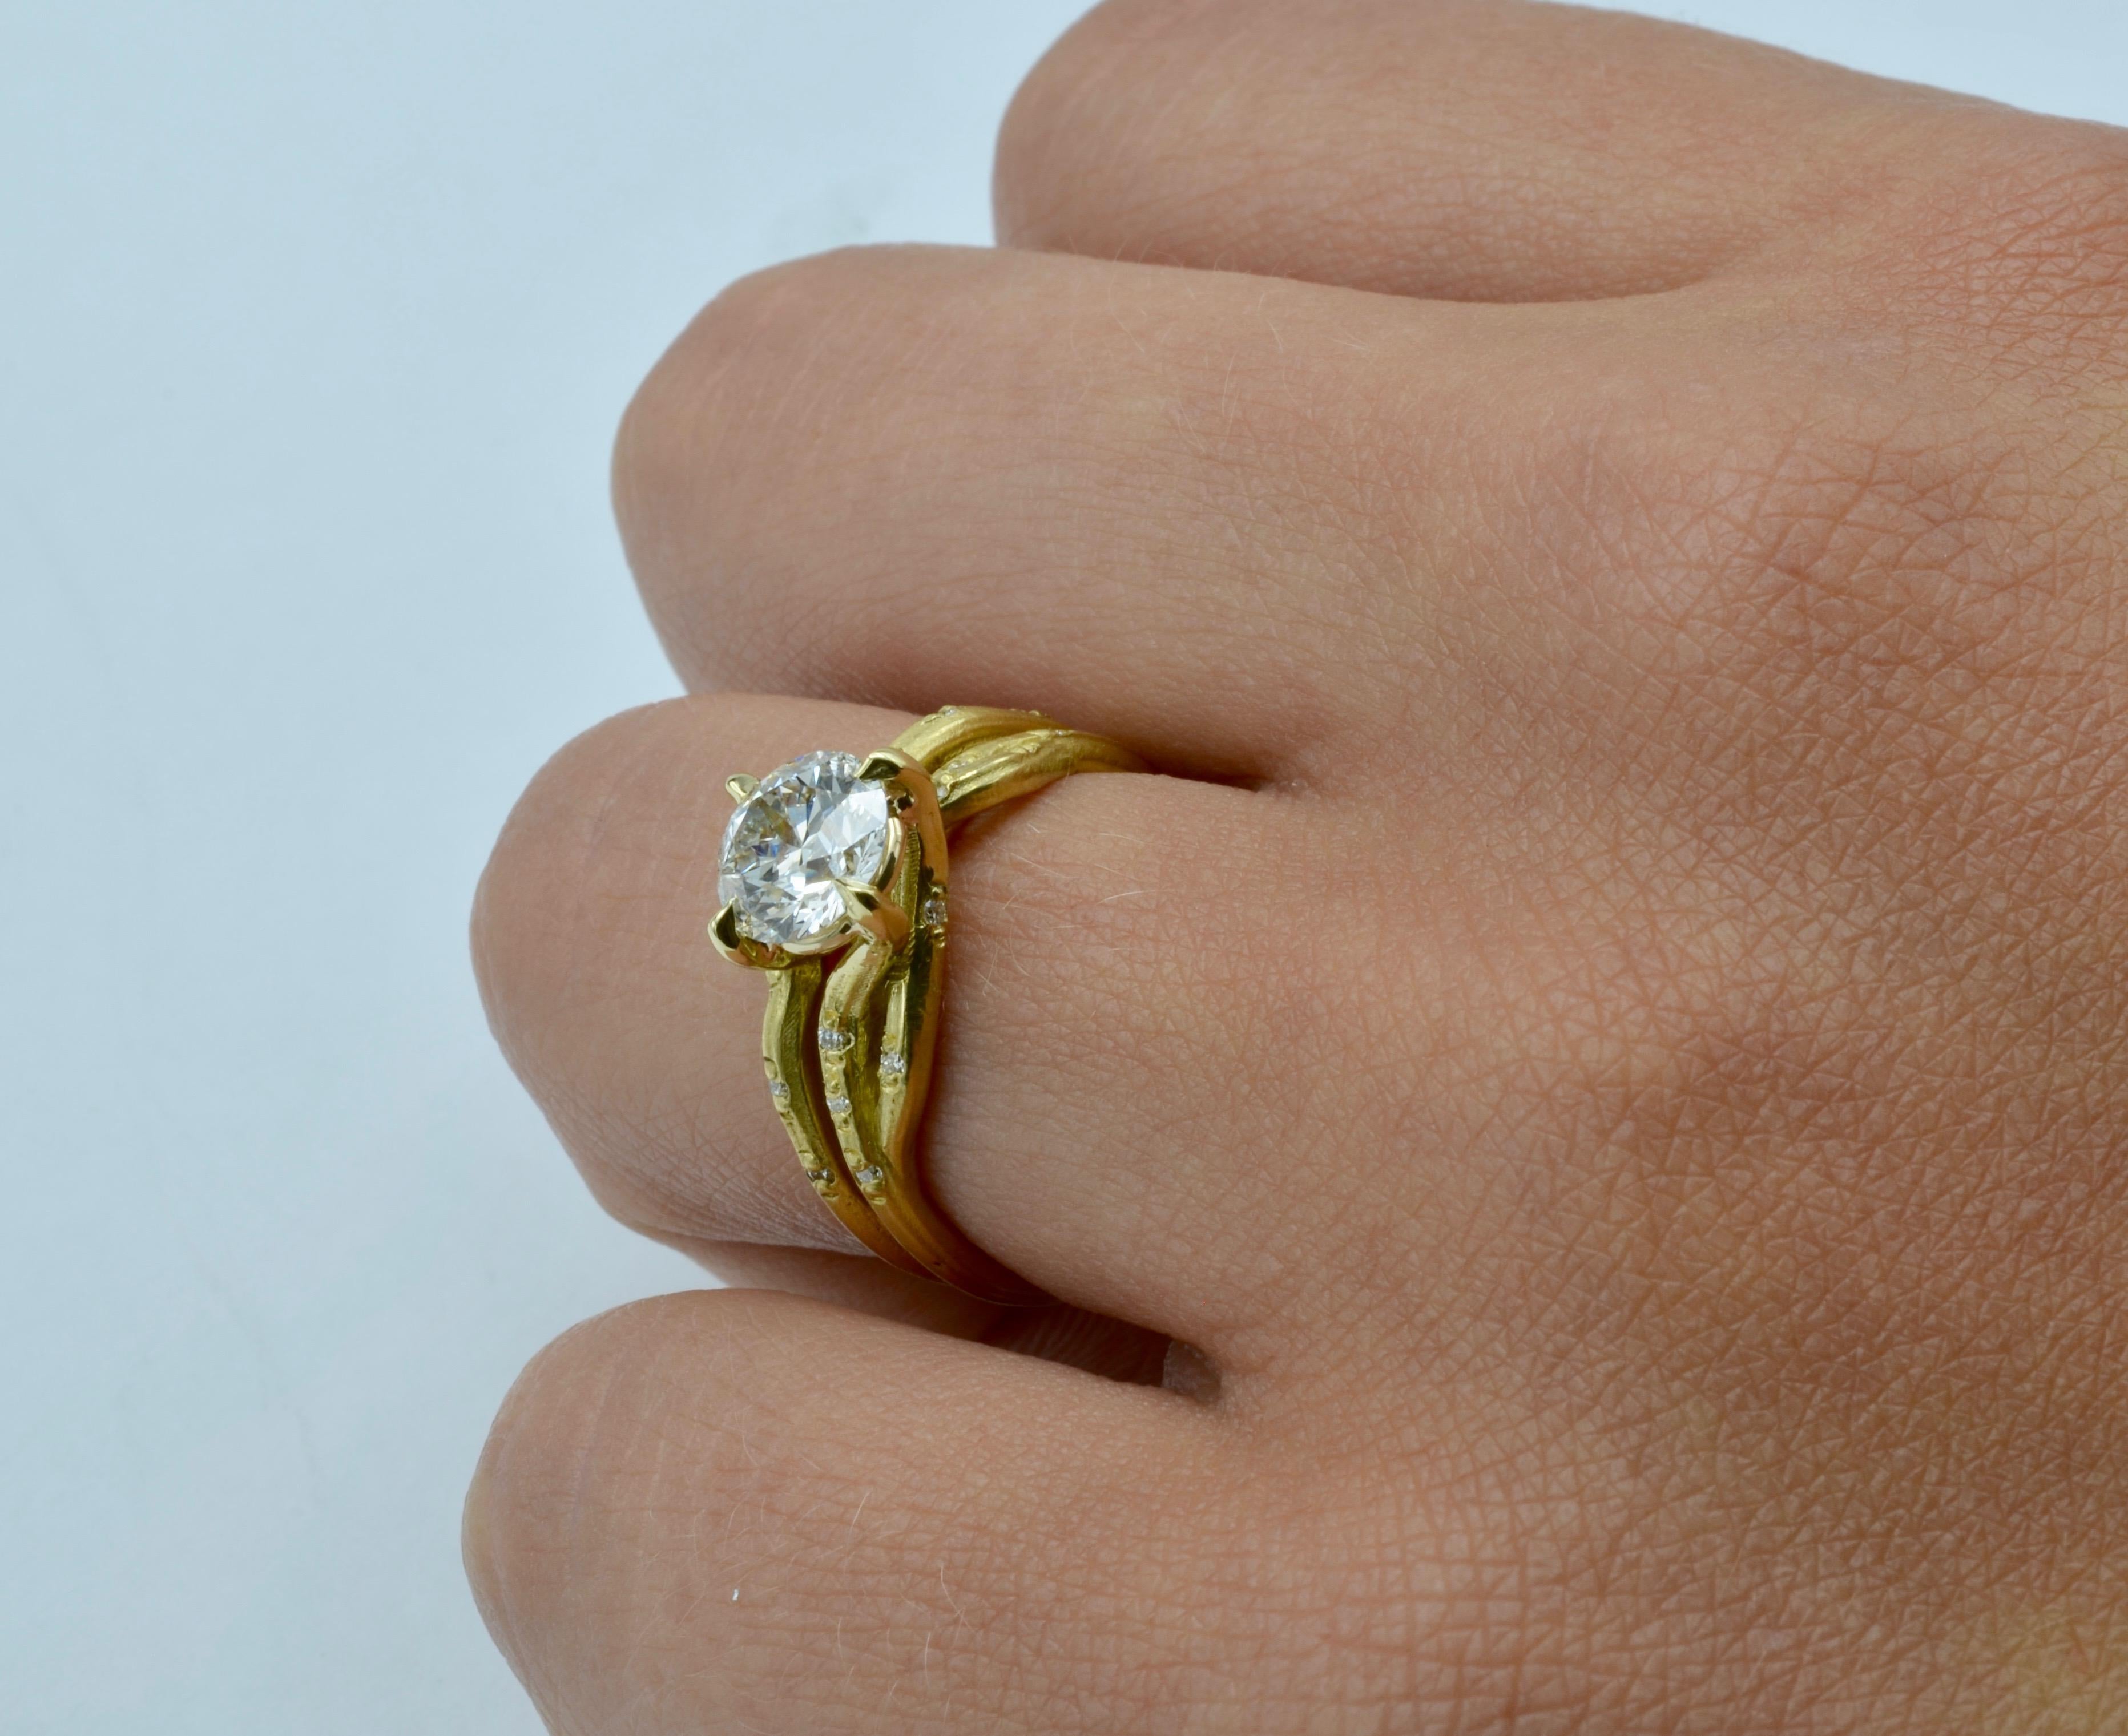 Women's Alternative Engagement Ring 1.18 ct Diamond Old Mine Cut in 18K yellow gold